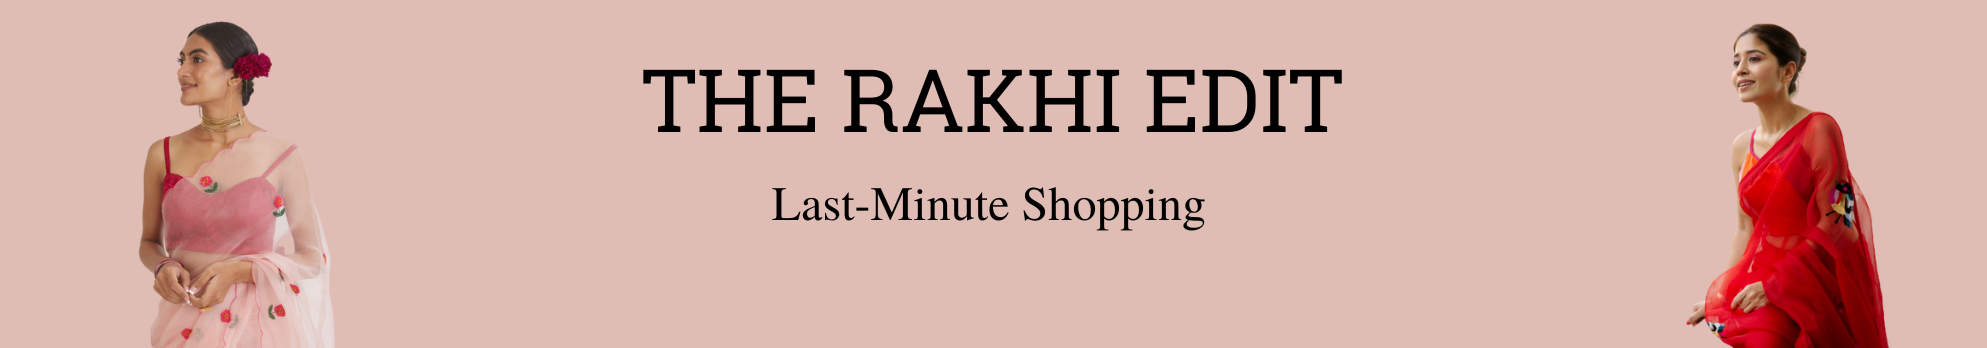 Rakhi Edit